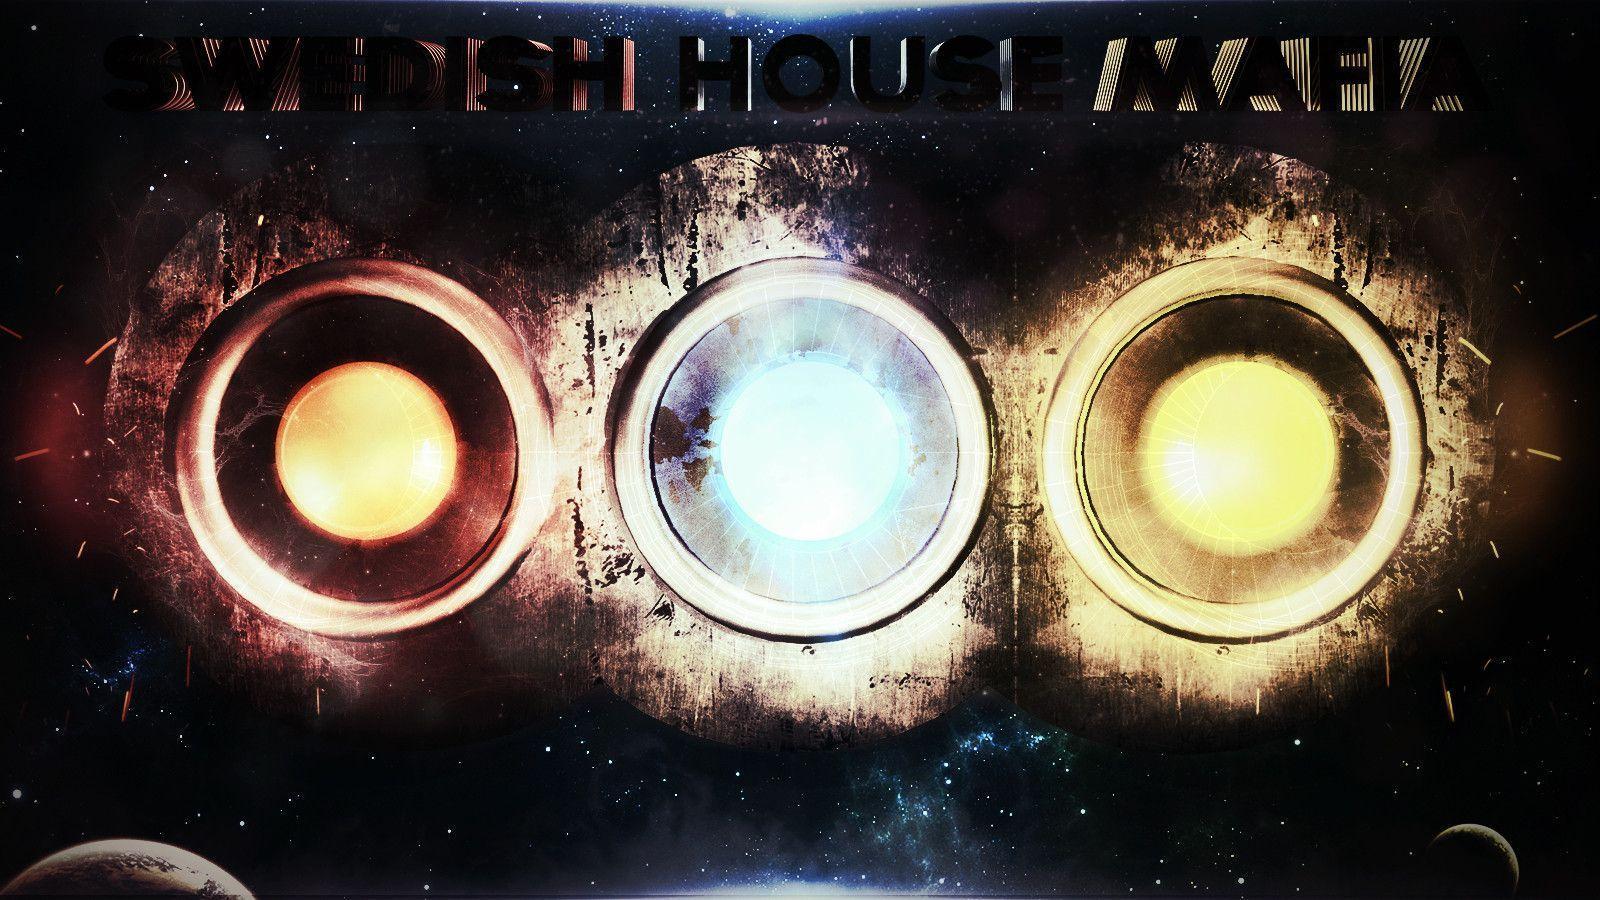 Swedish House Mafia Wallpaper 1280x853 px Free Download